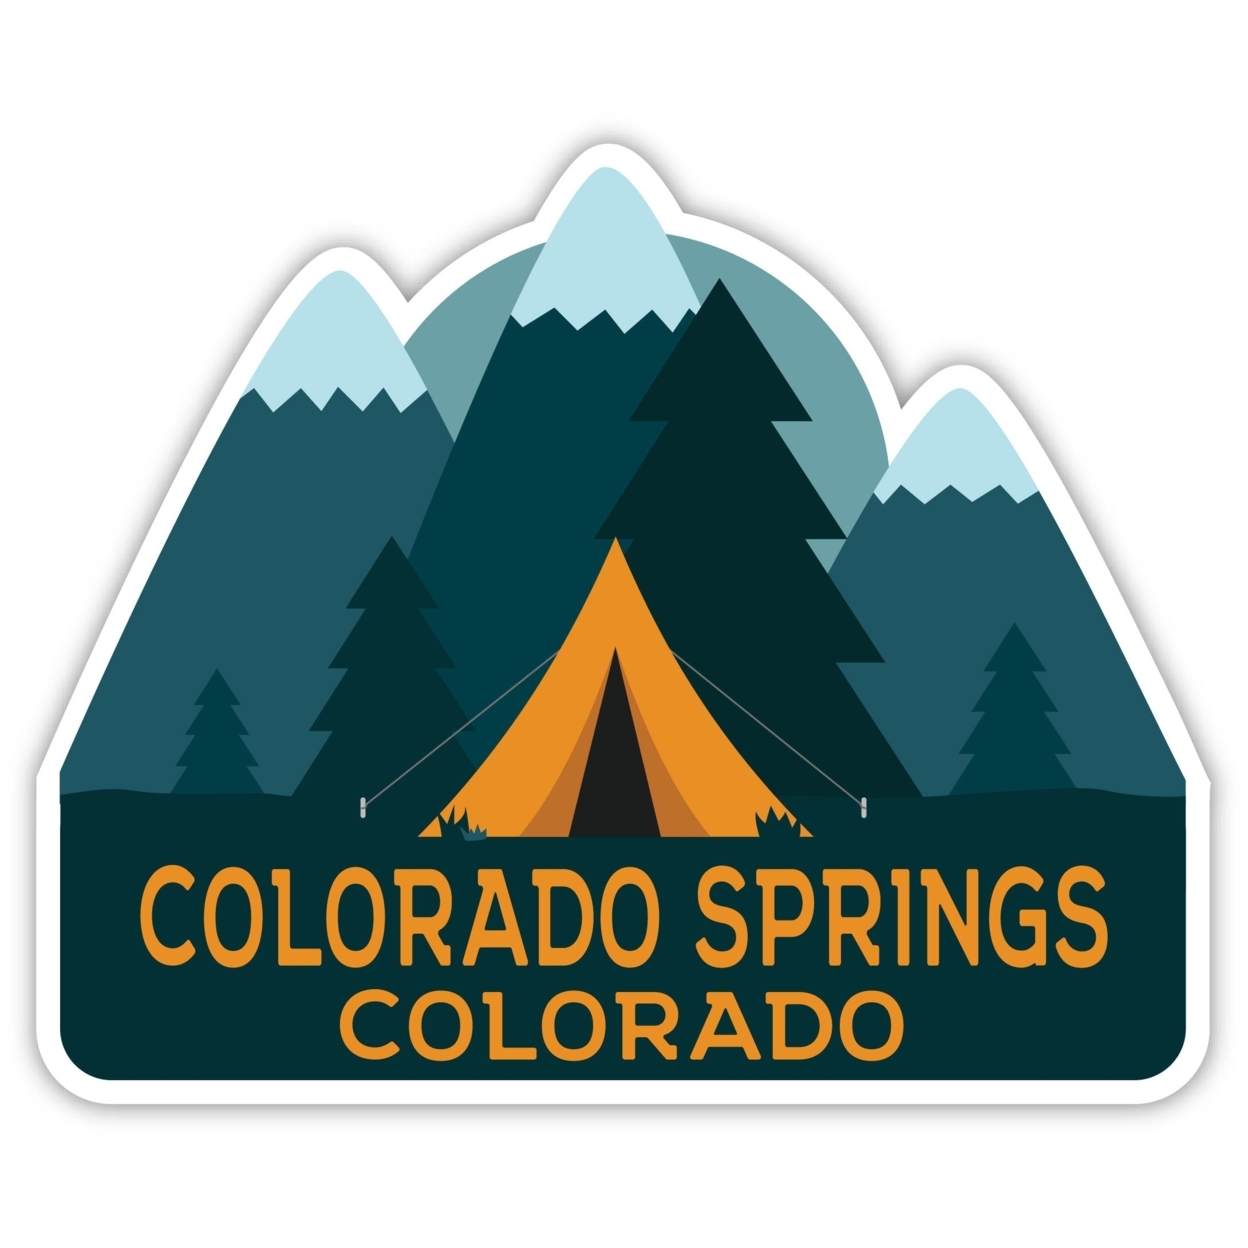 Colorado Springs Colorado Souvenir Decorative Stickers (Choose Theme And Size) - 4-Pack, 8-Inch, Tent